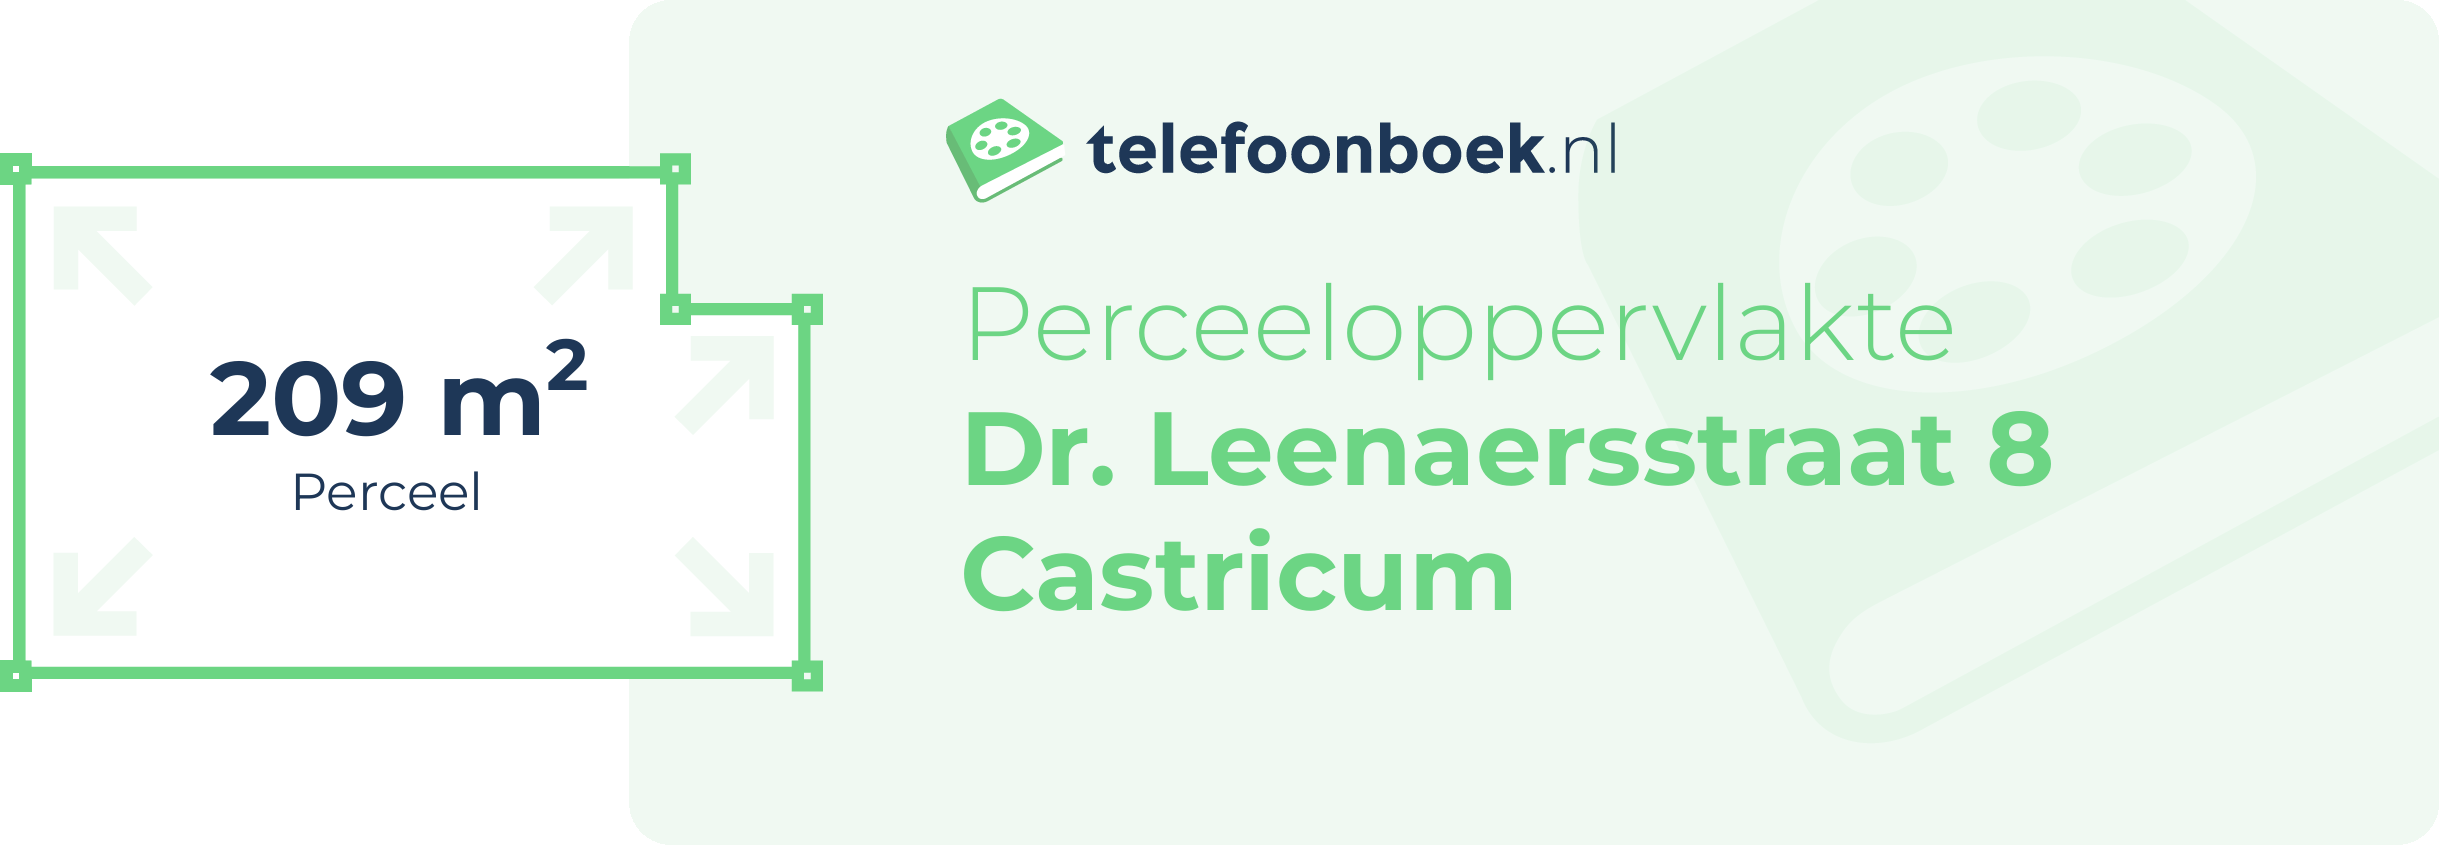 Perceeloppervlakte Dr. Leenaersstraat 8 Castricum